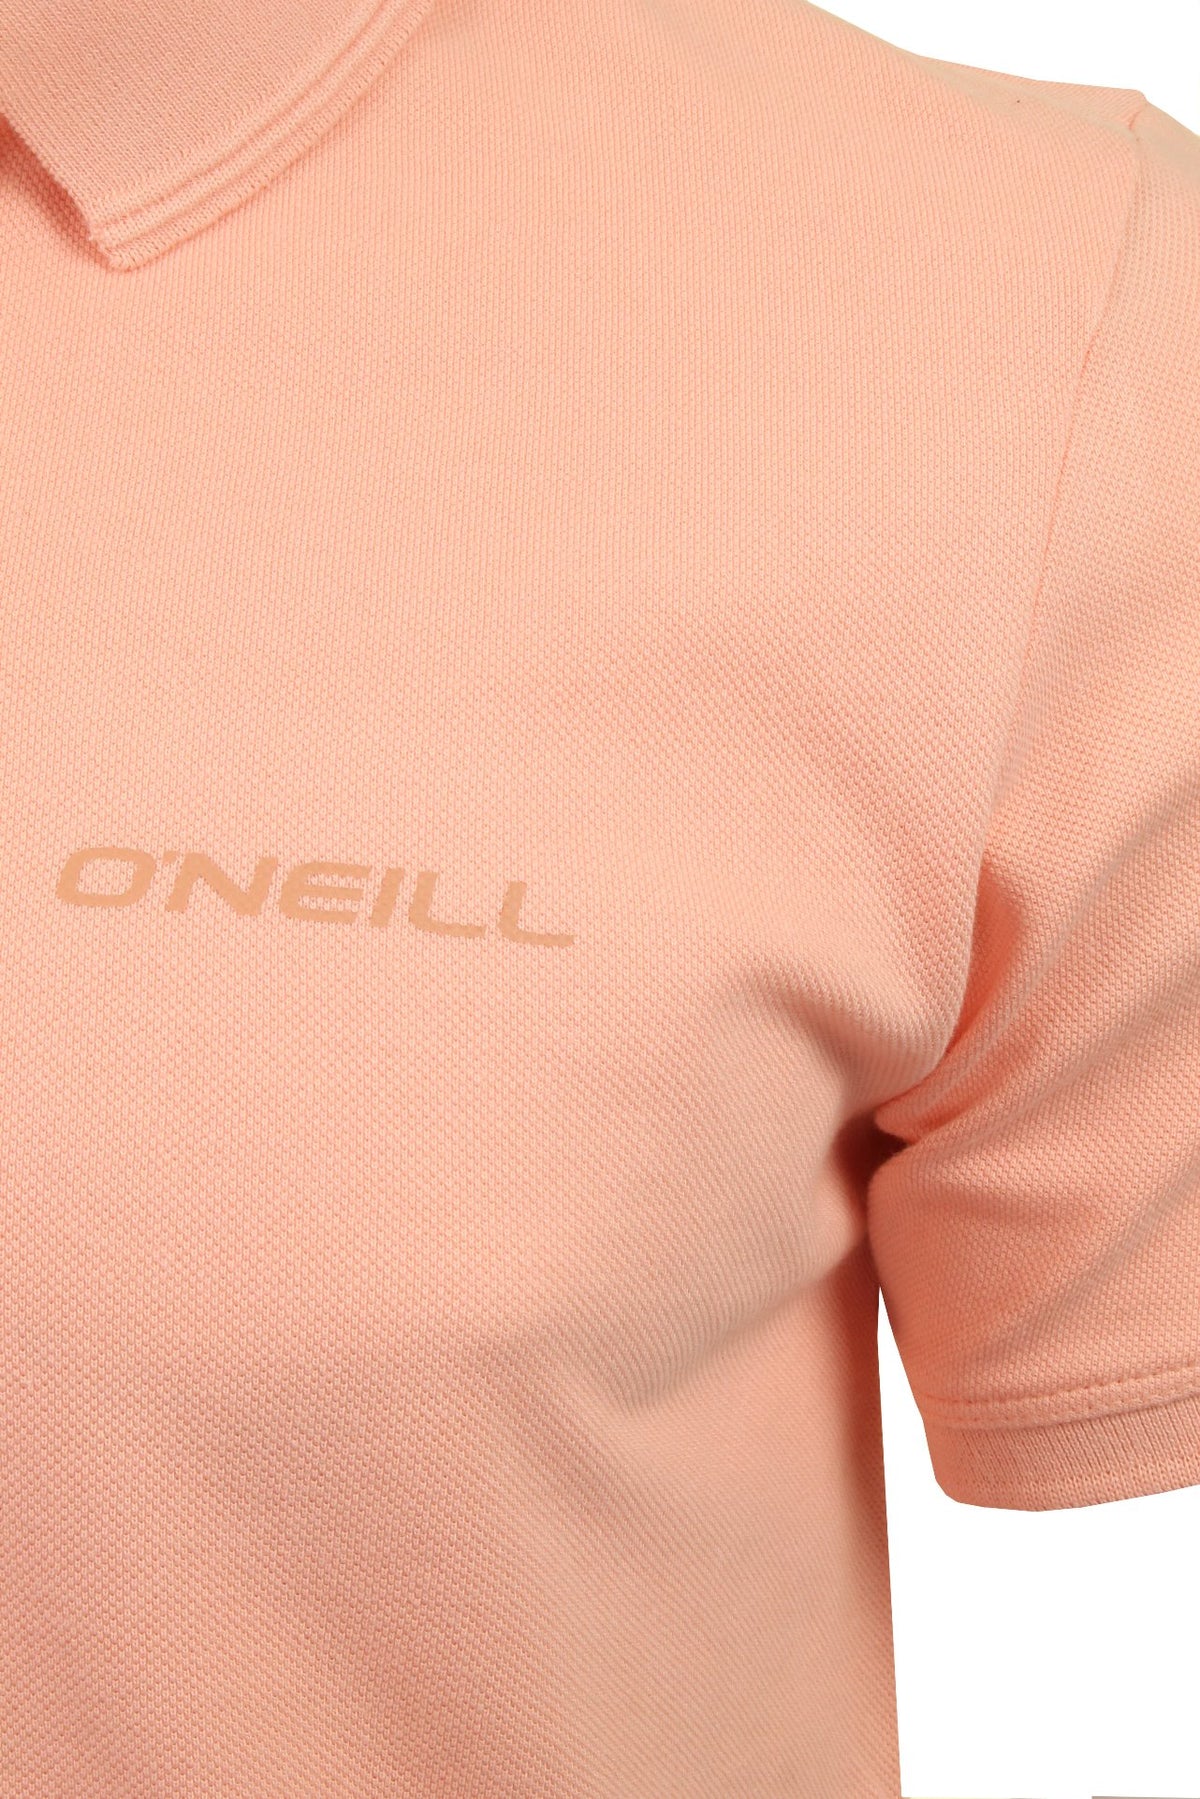 O'Neill Mens Pique Polo T-Shirt, 02, 9A2402, Bless